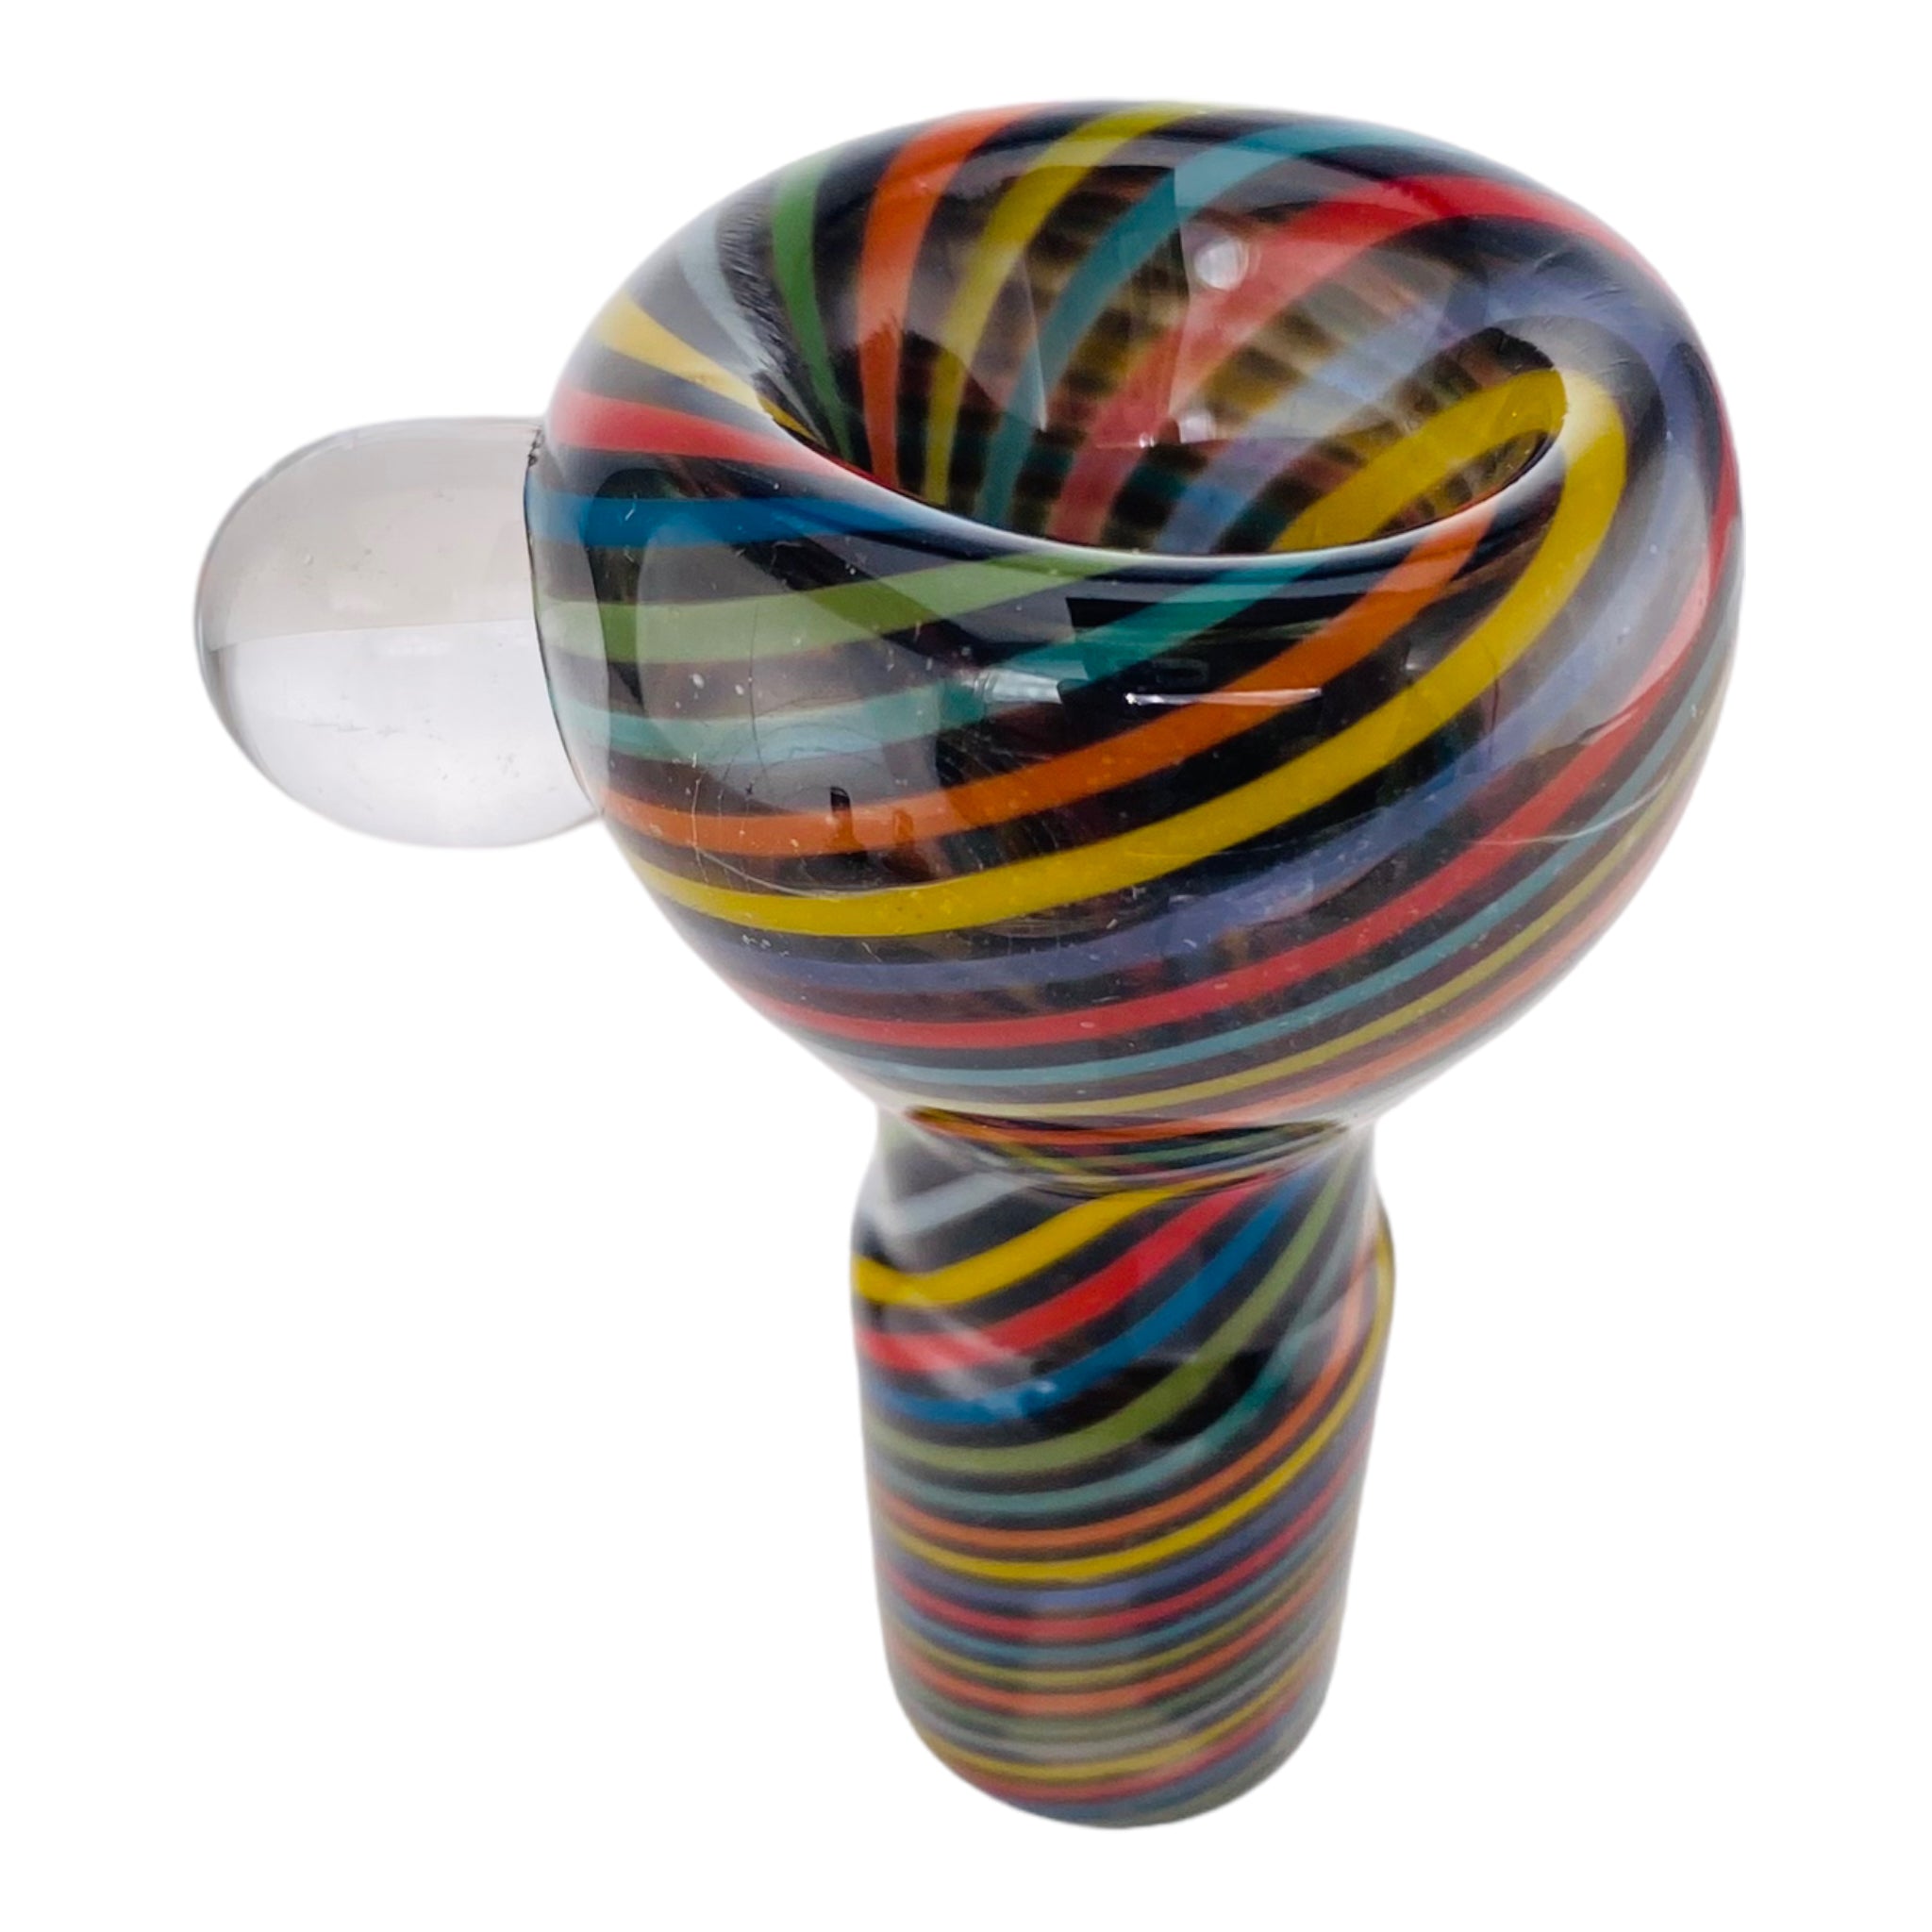 18mm Flower Bowl - Rainbow Full Color Twist Bong Bowl Piece